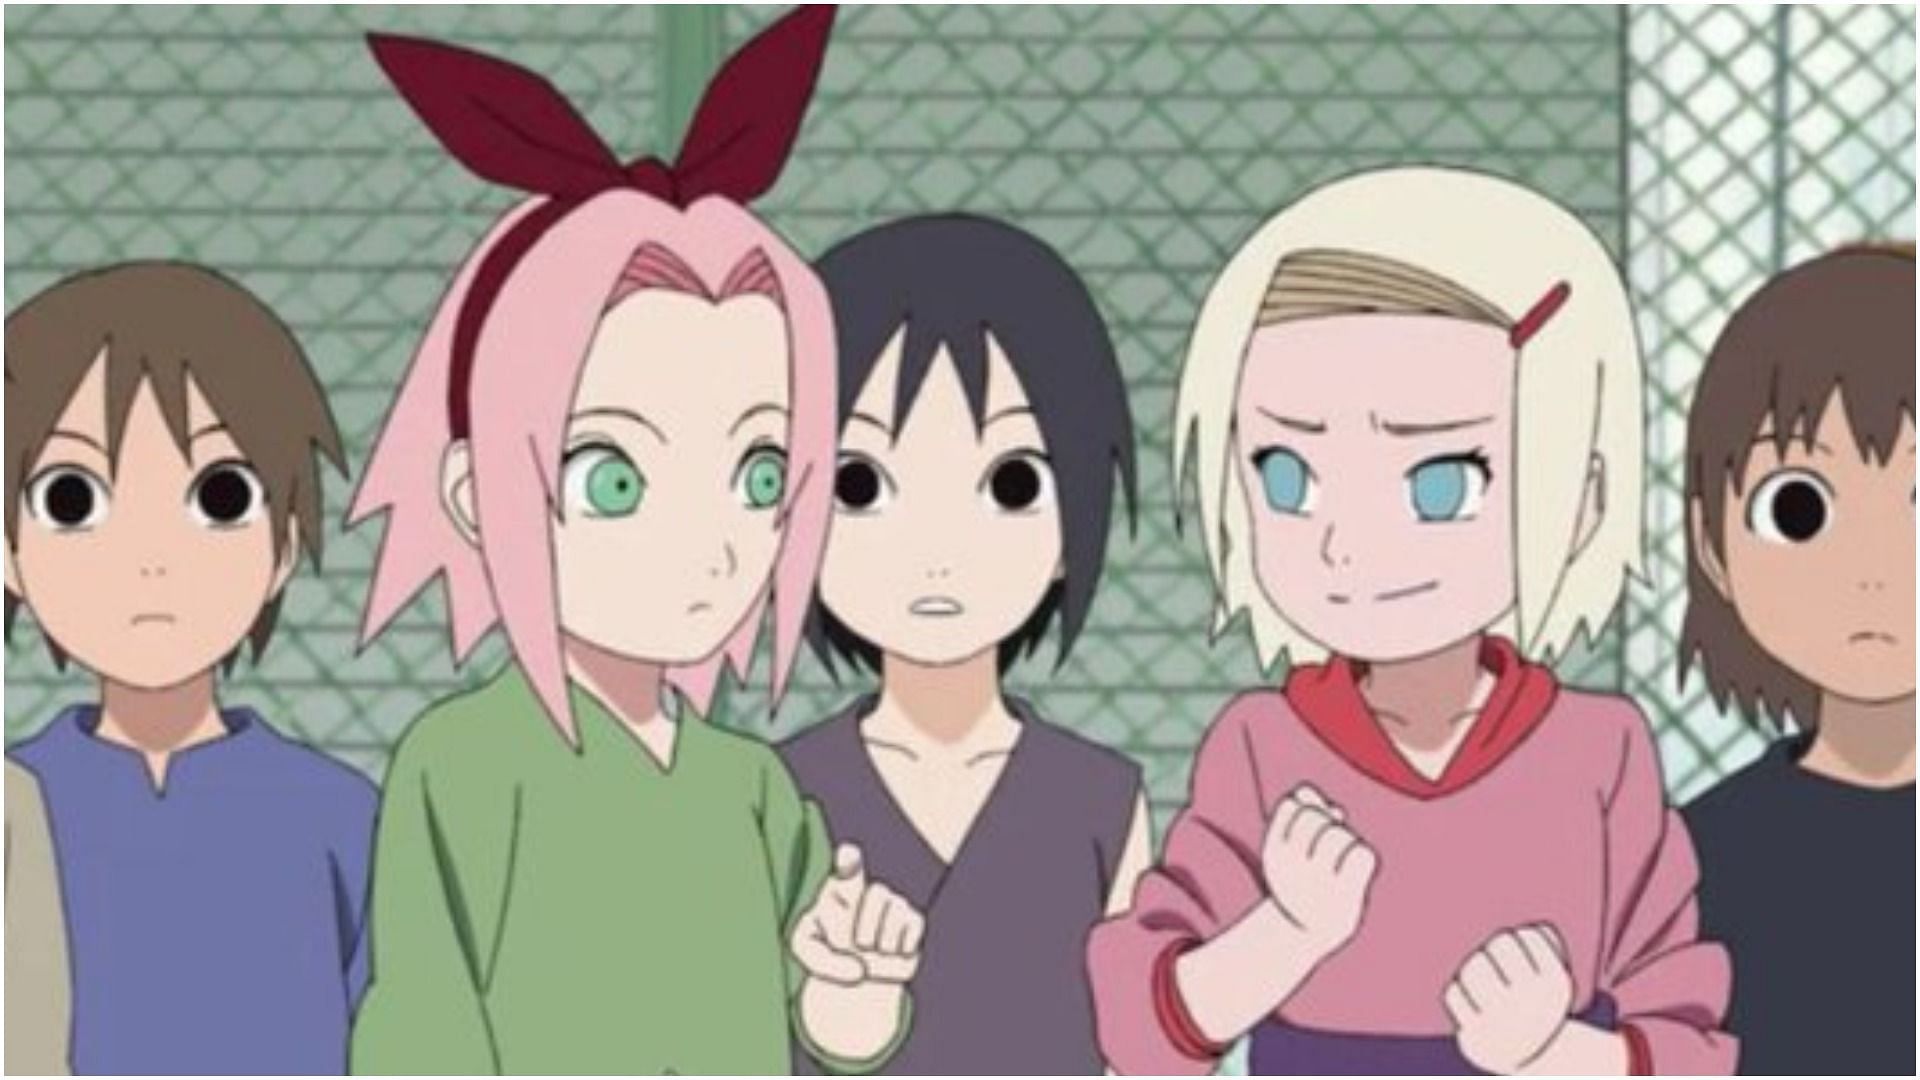 Sakura argued with Ino about Sasuke during her childhood (Image via Naruto)